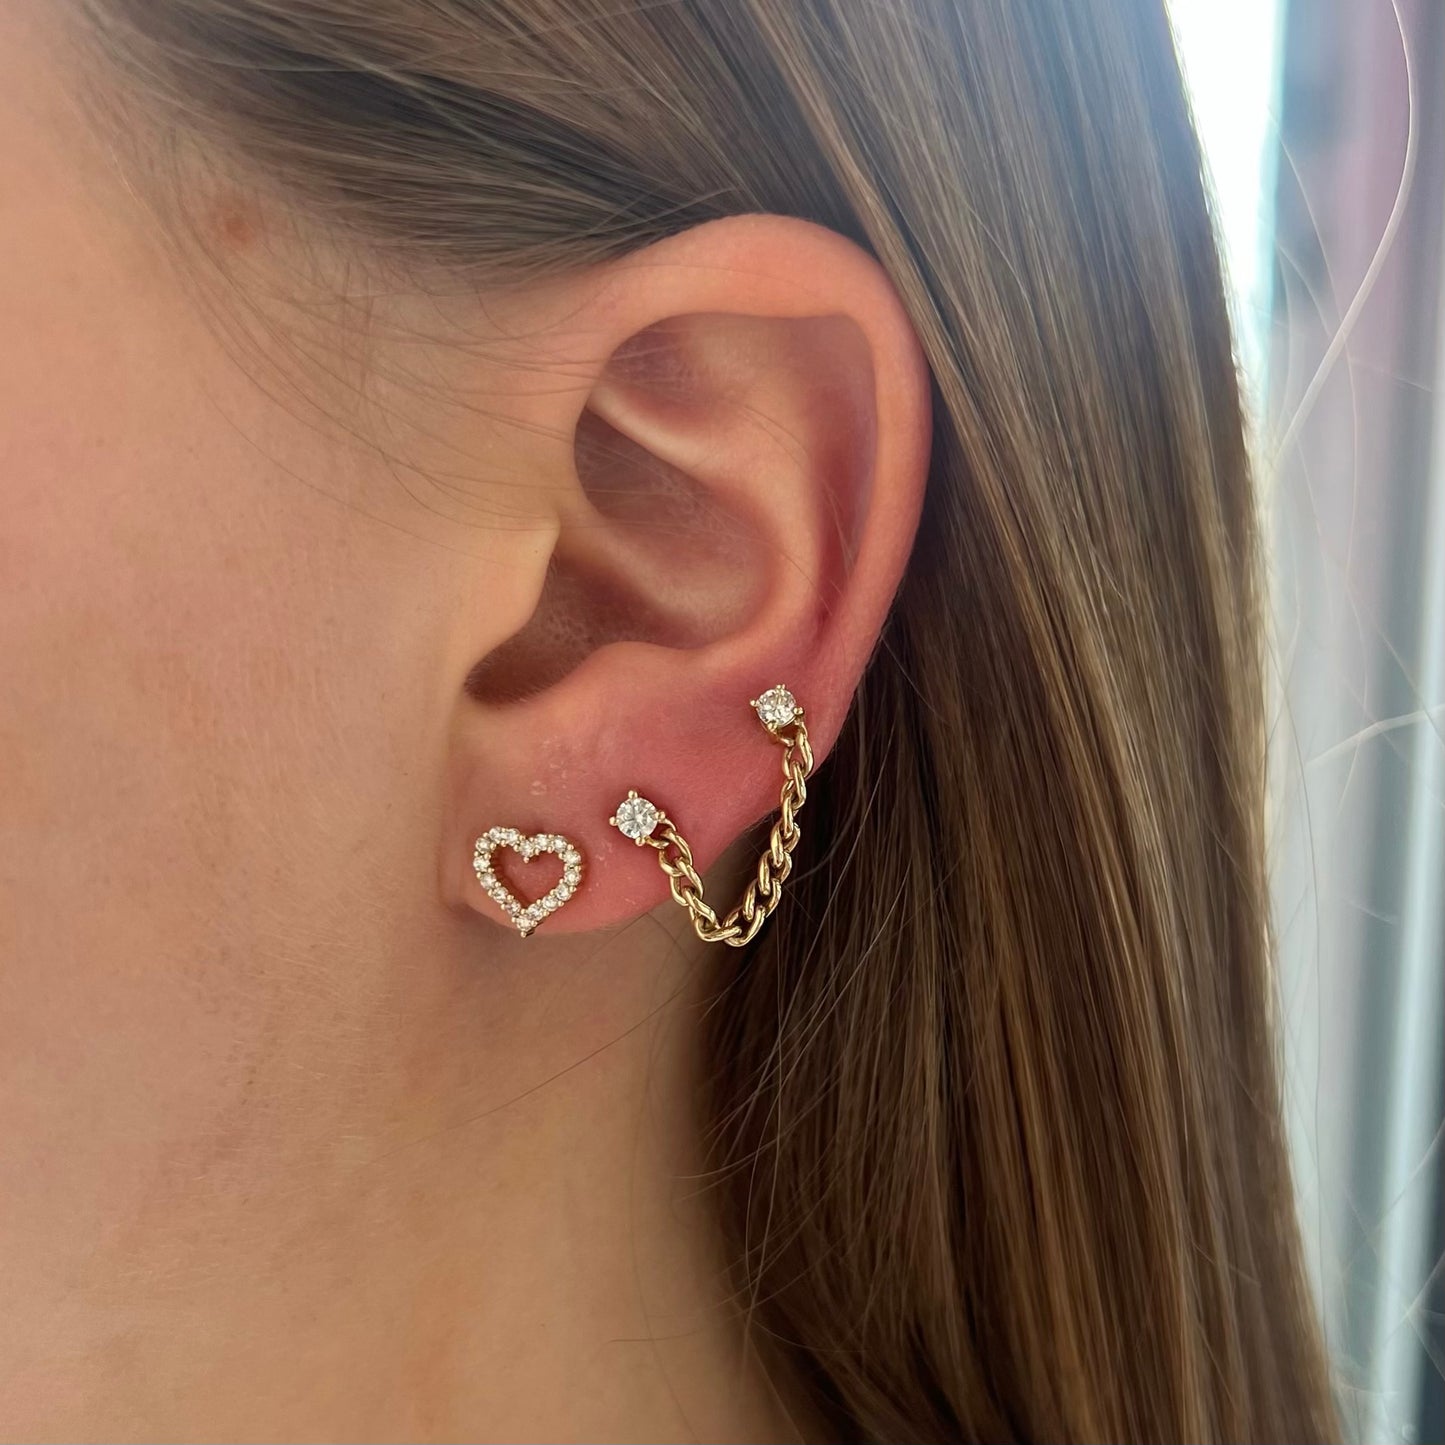 Single Ear Diamond Earring With Hanging Cuban Chain For Double Piercing